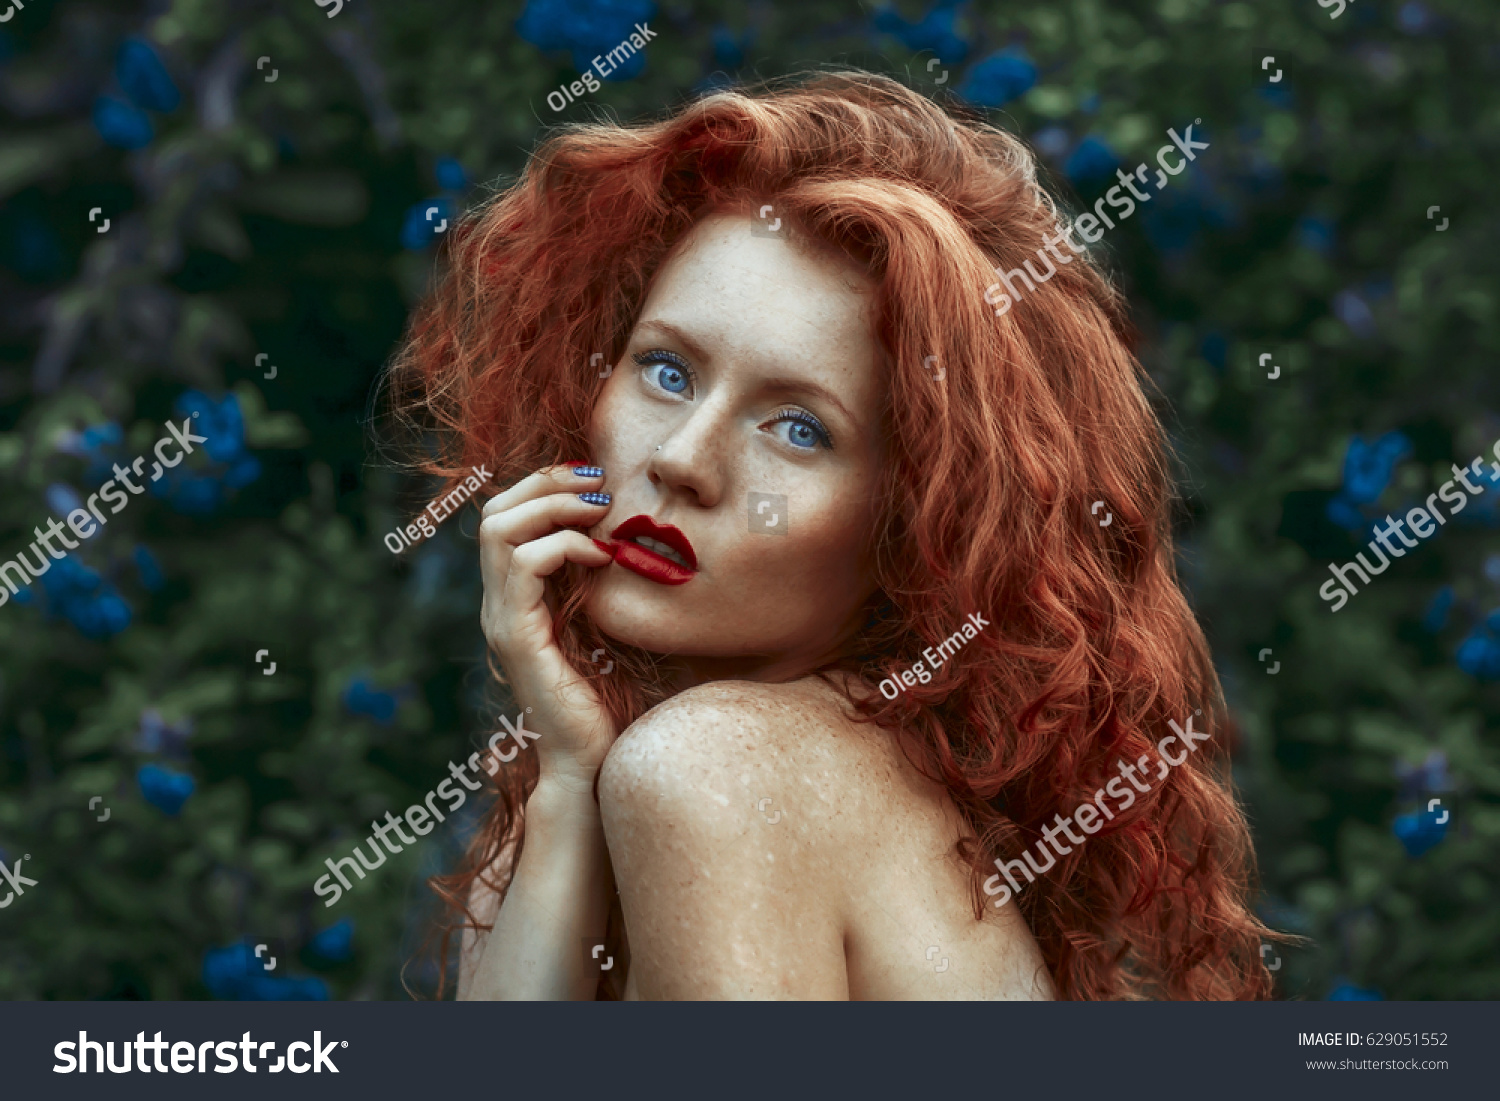 Naked Red Hair Women